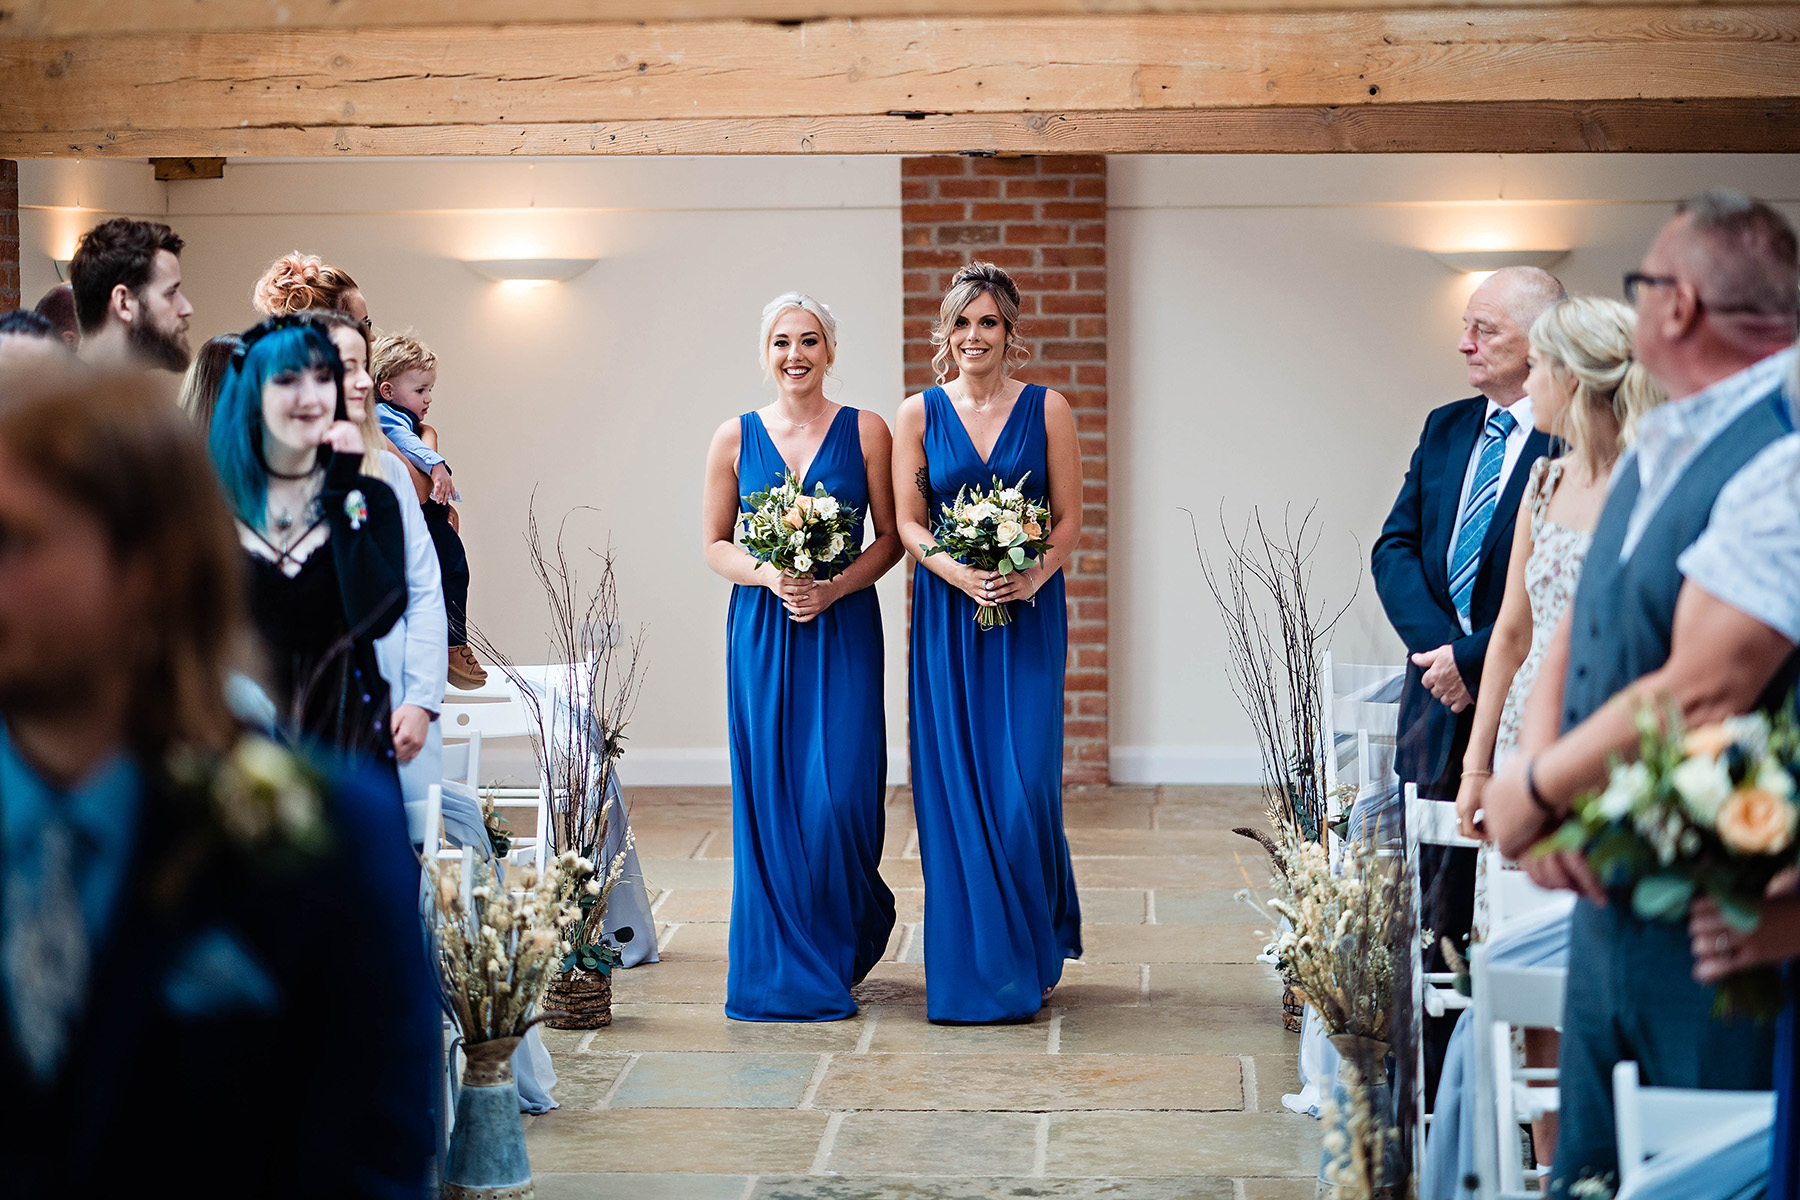 The ceremony at Hanbury Wedding Barn